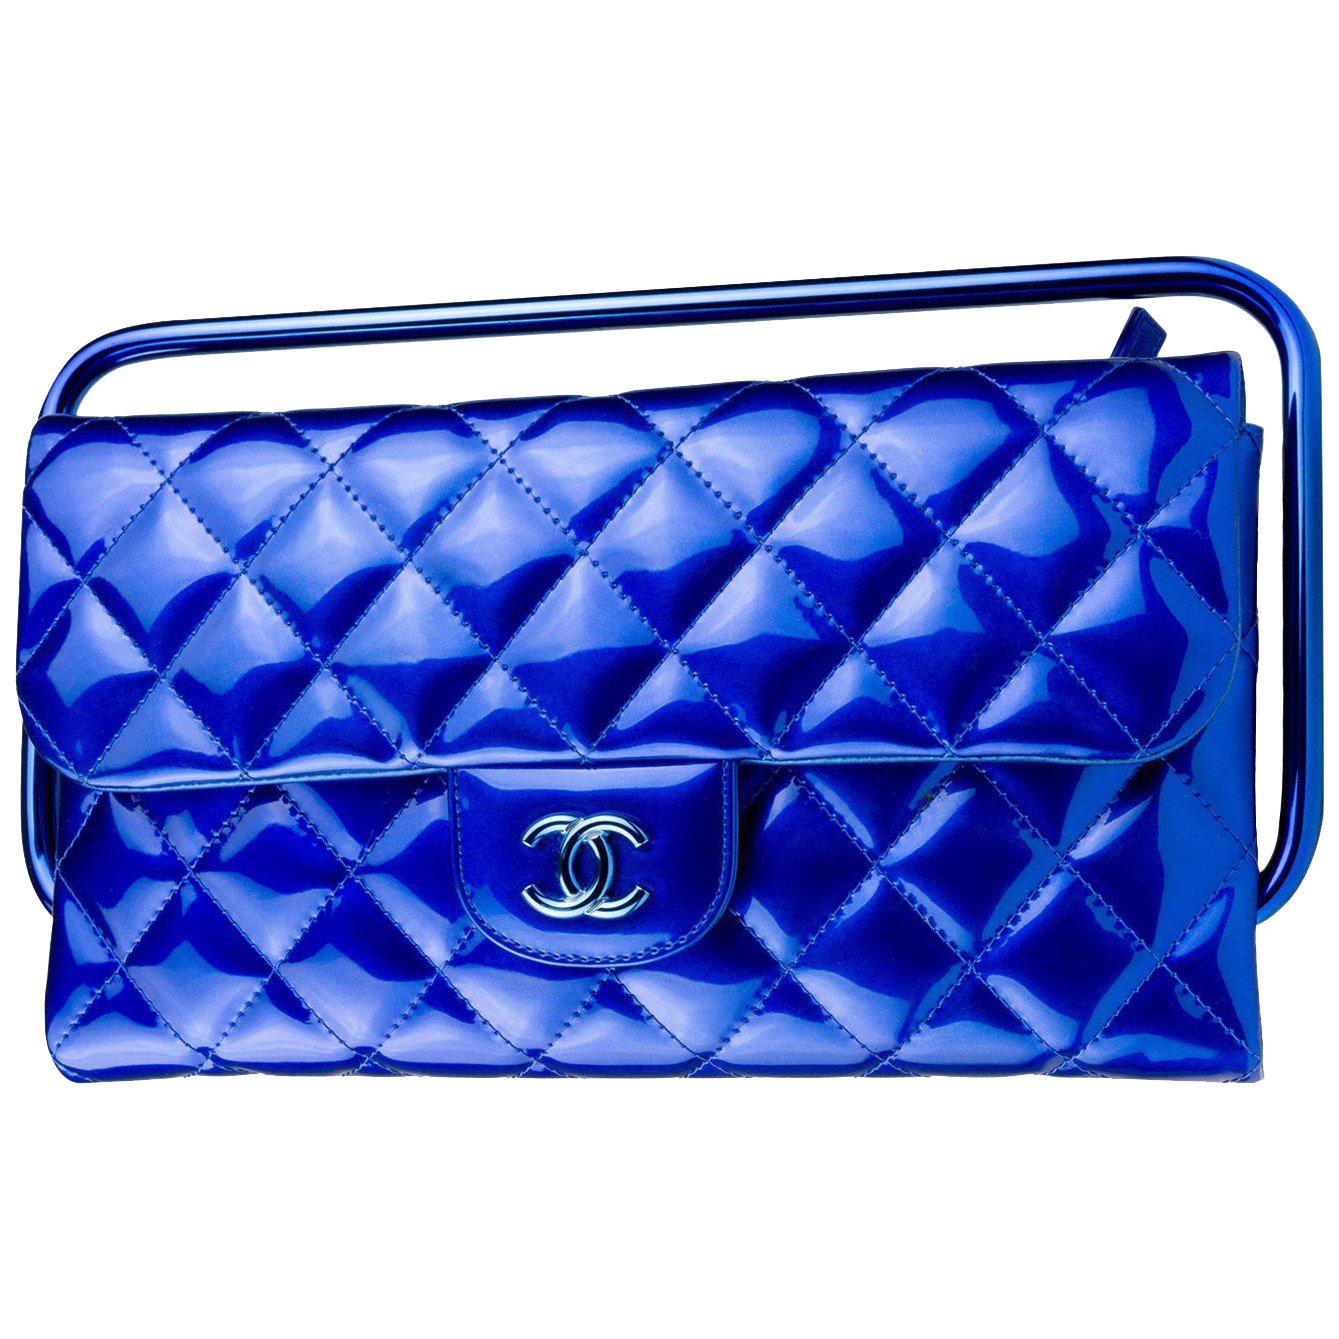 Chanel 2014 Electric Blaue Clutch aus gestepptem Lackleder mit abnehmbarem Rahmen im Angebot